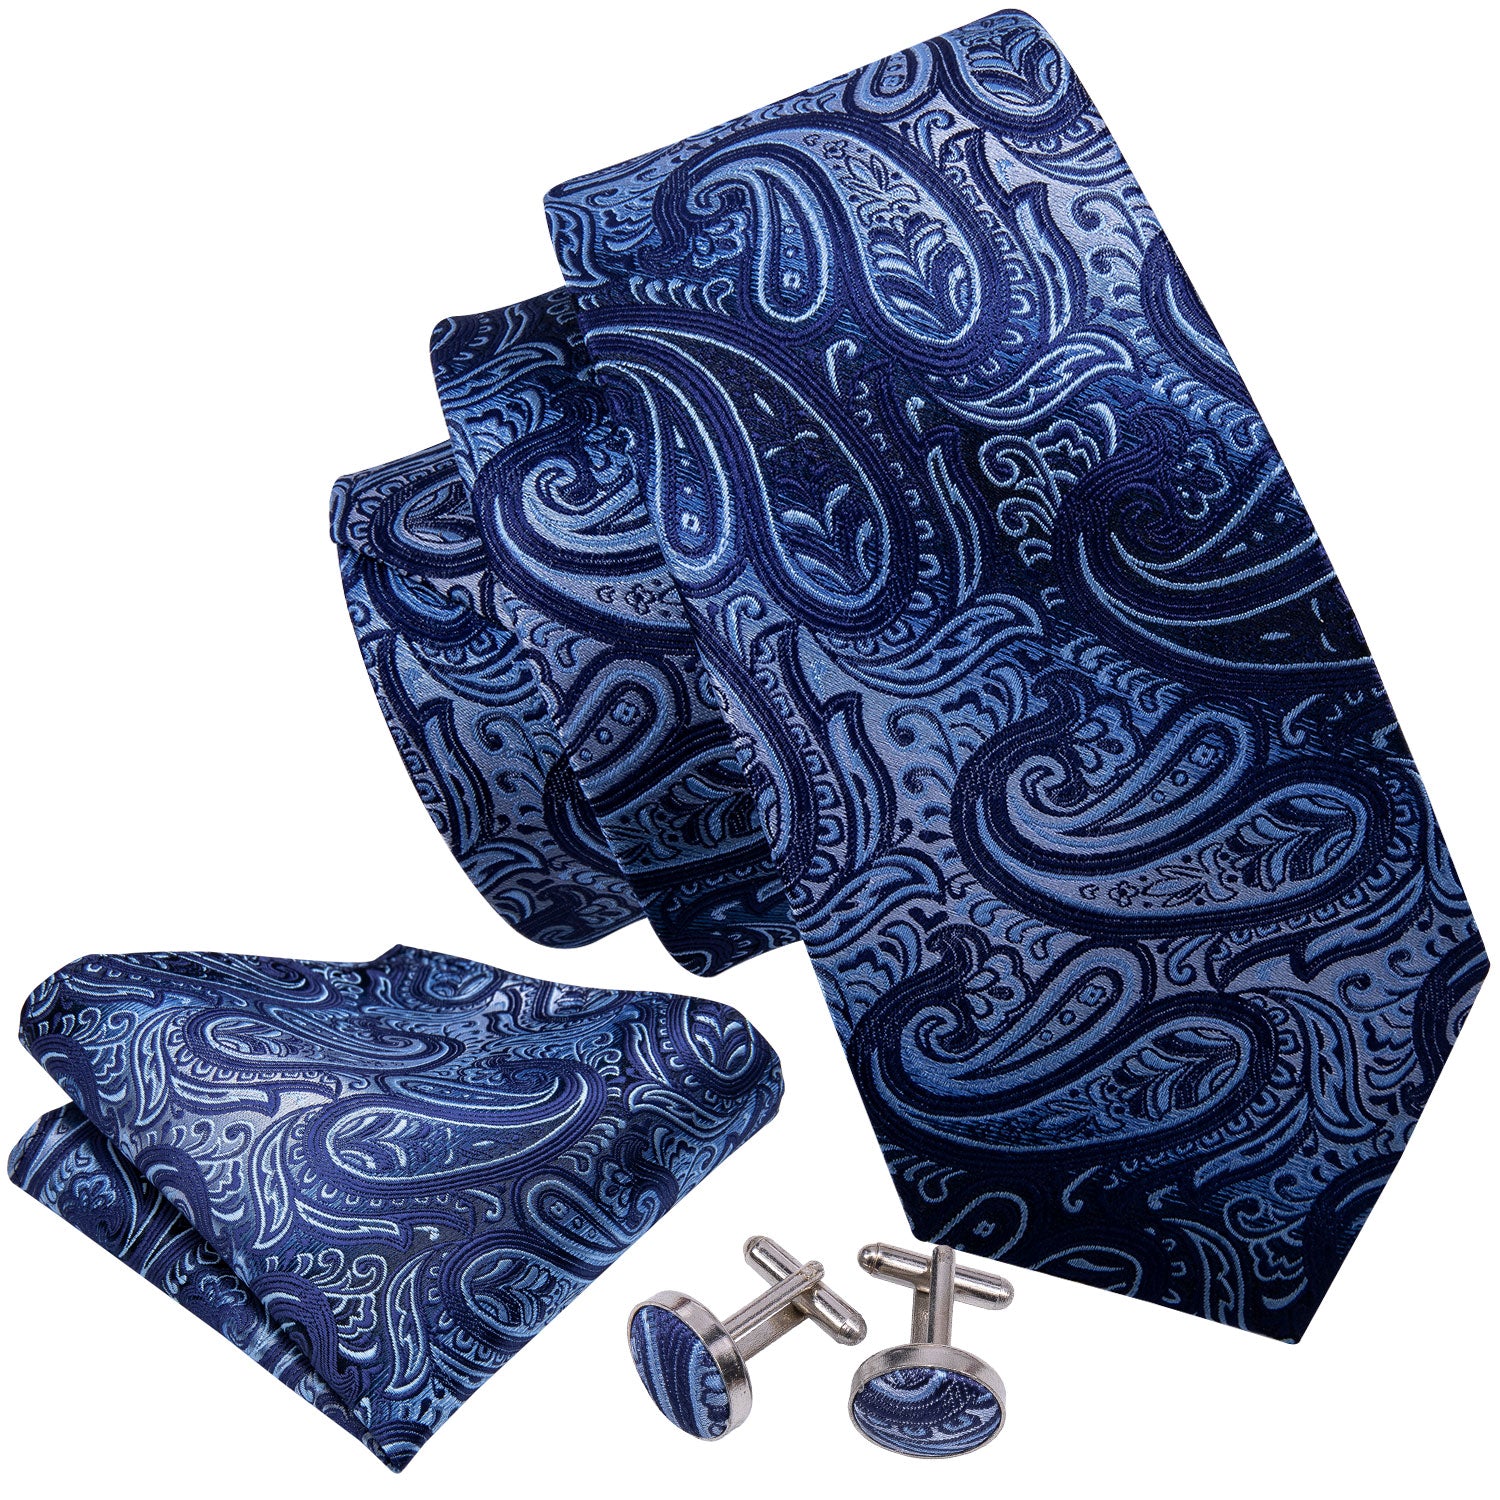 Barry.wang Blue Tie Awesome Paisley Men's Tie Handkerchief Cufflinks Set